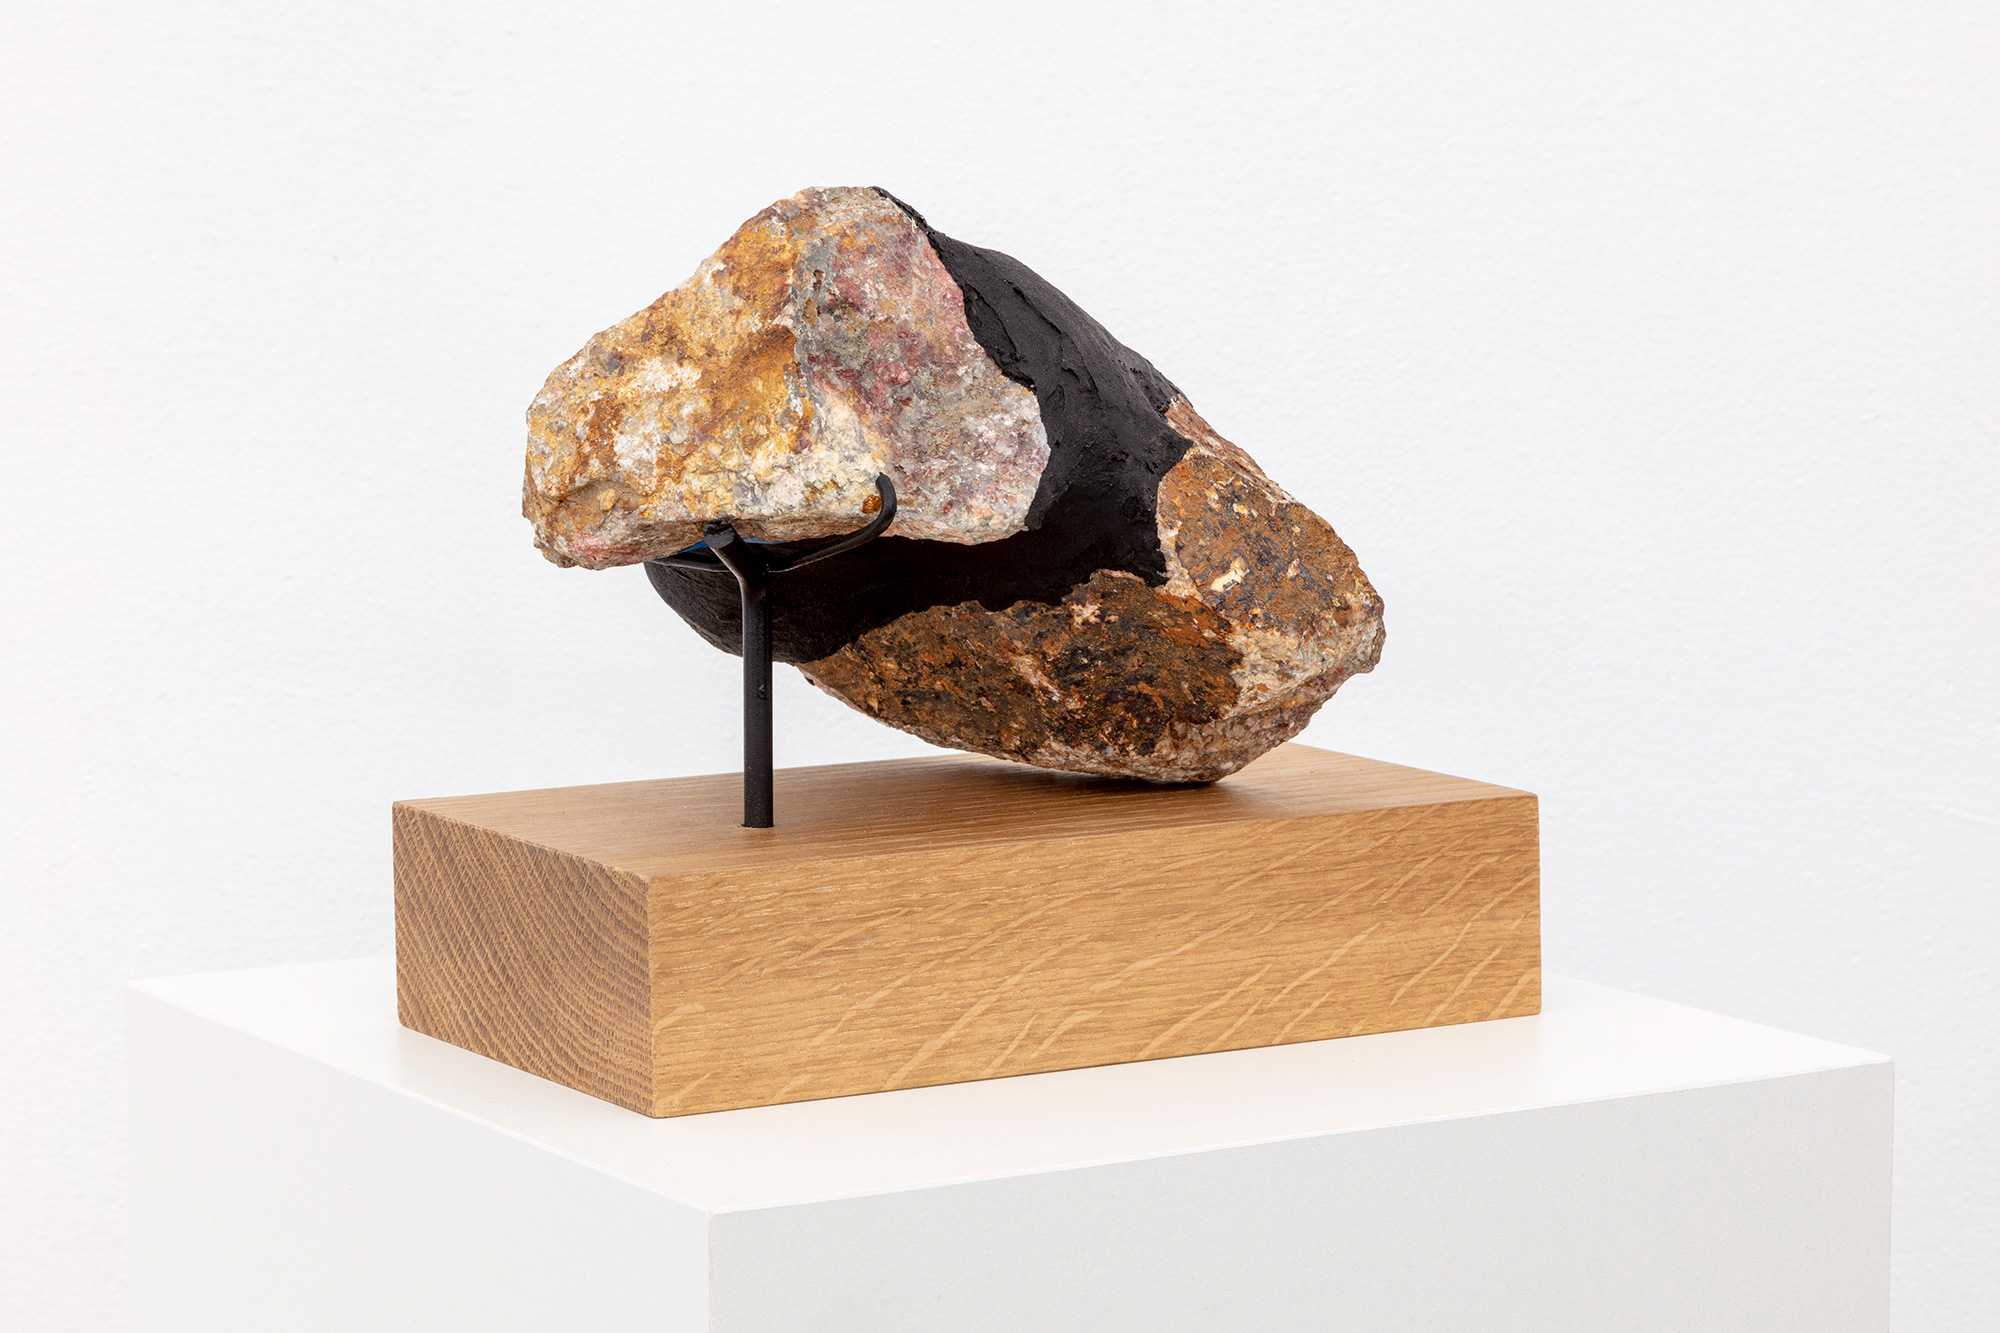 Sculpture with rock on wooden pedestal